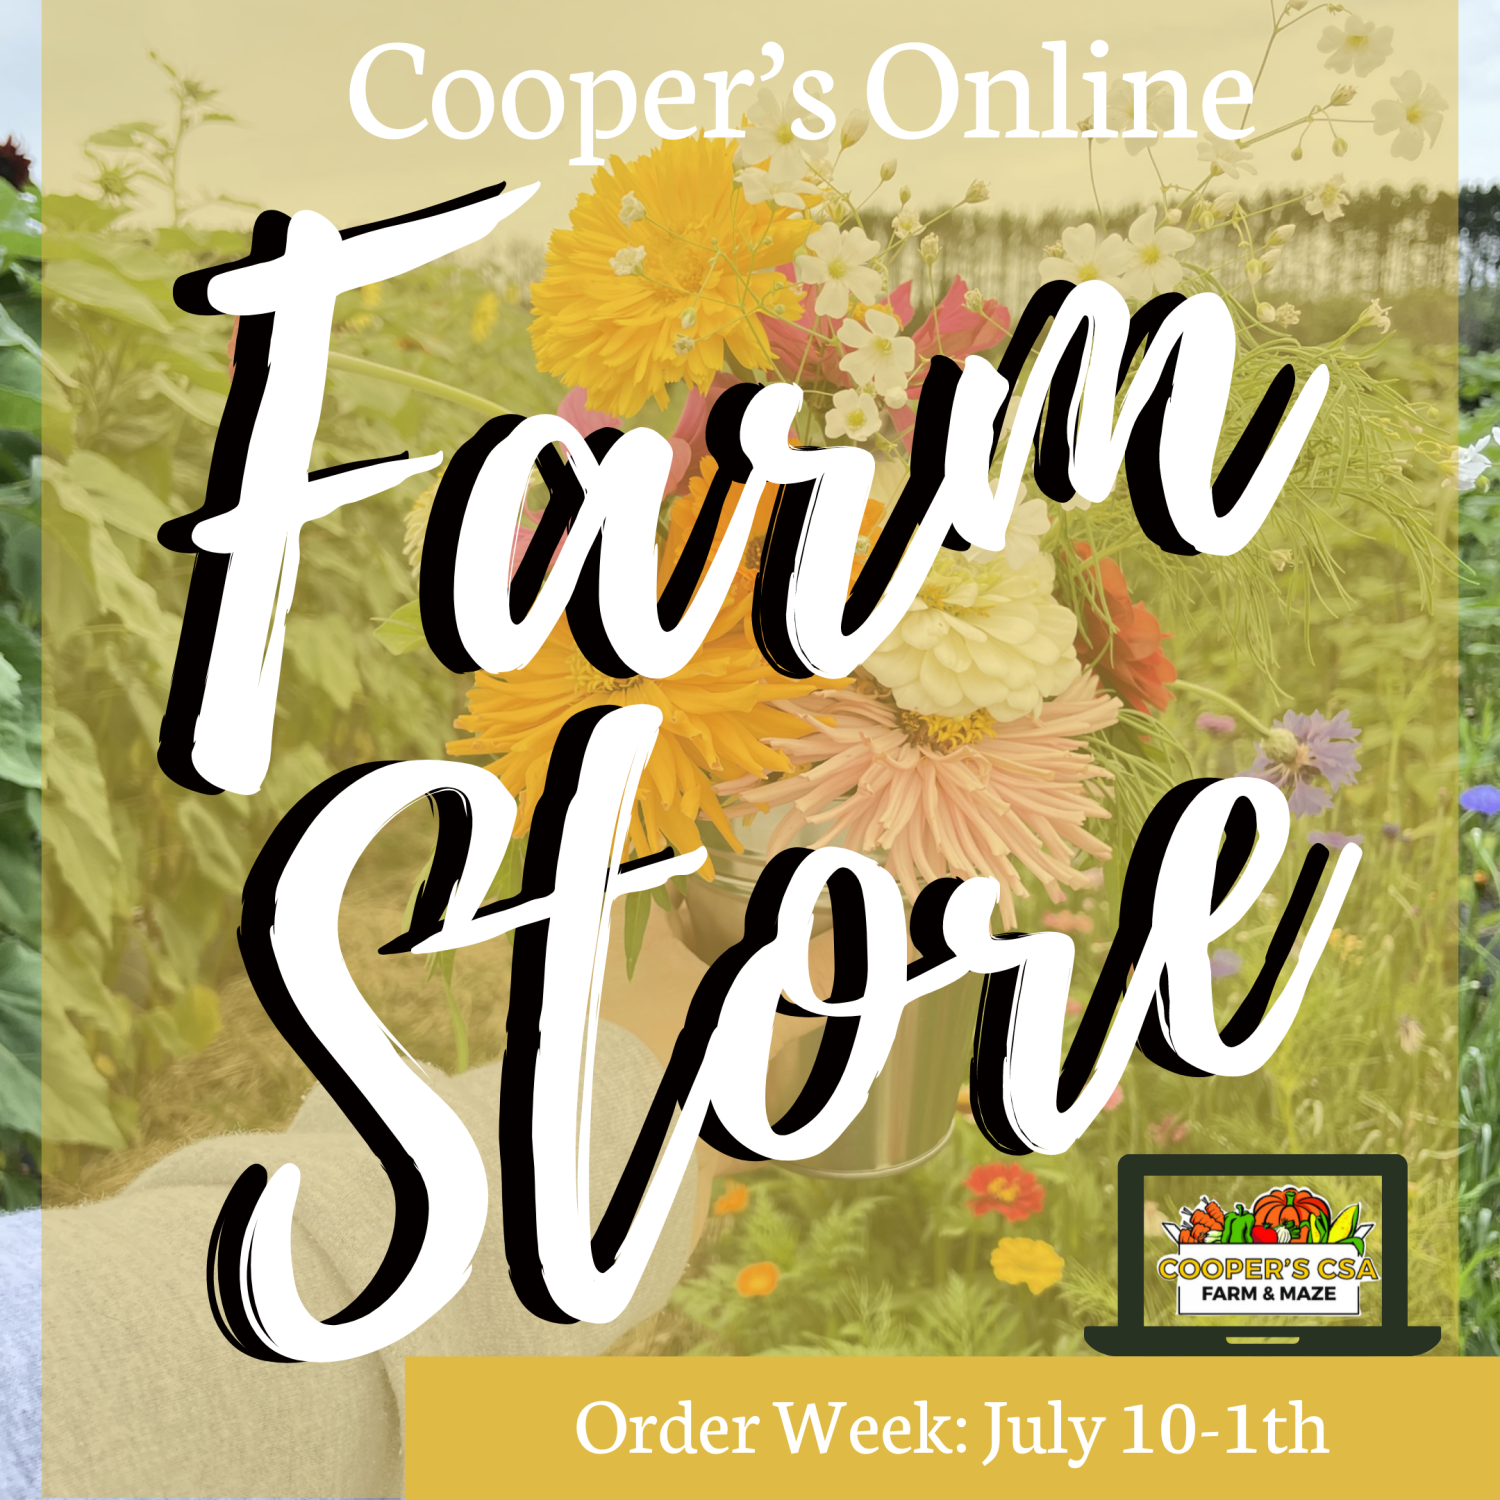 Next Happening: Coopers CSA Online FarmStore- Order week July 10-13th